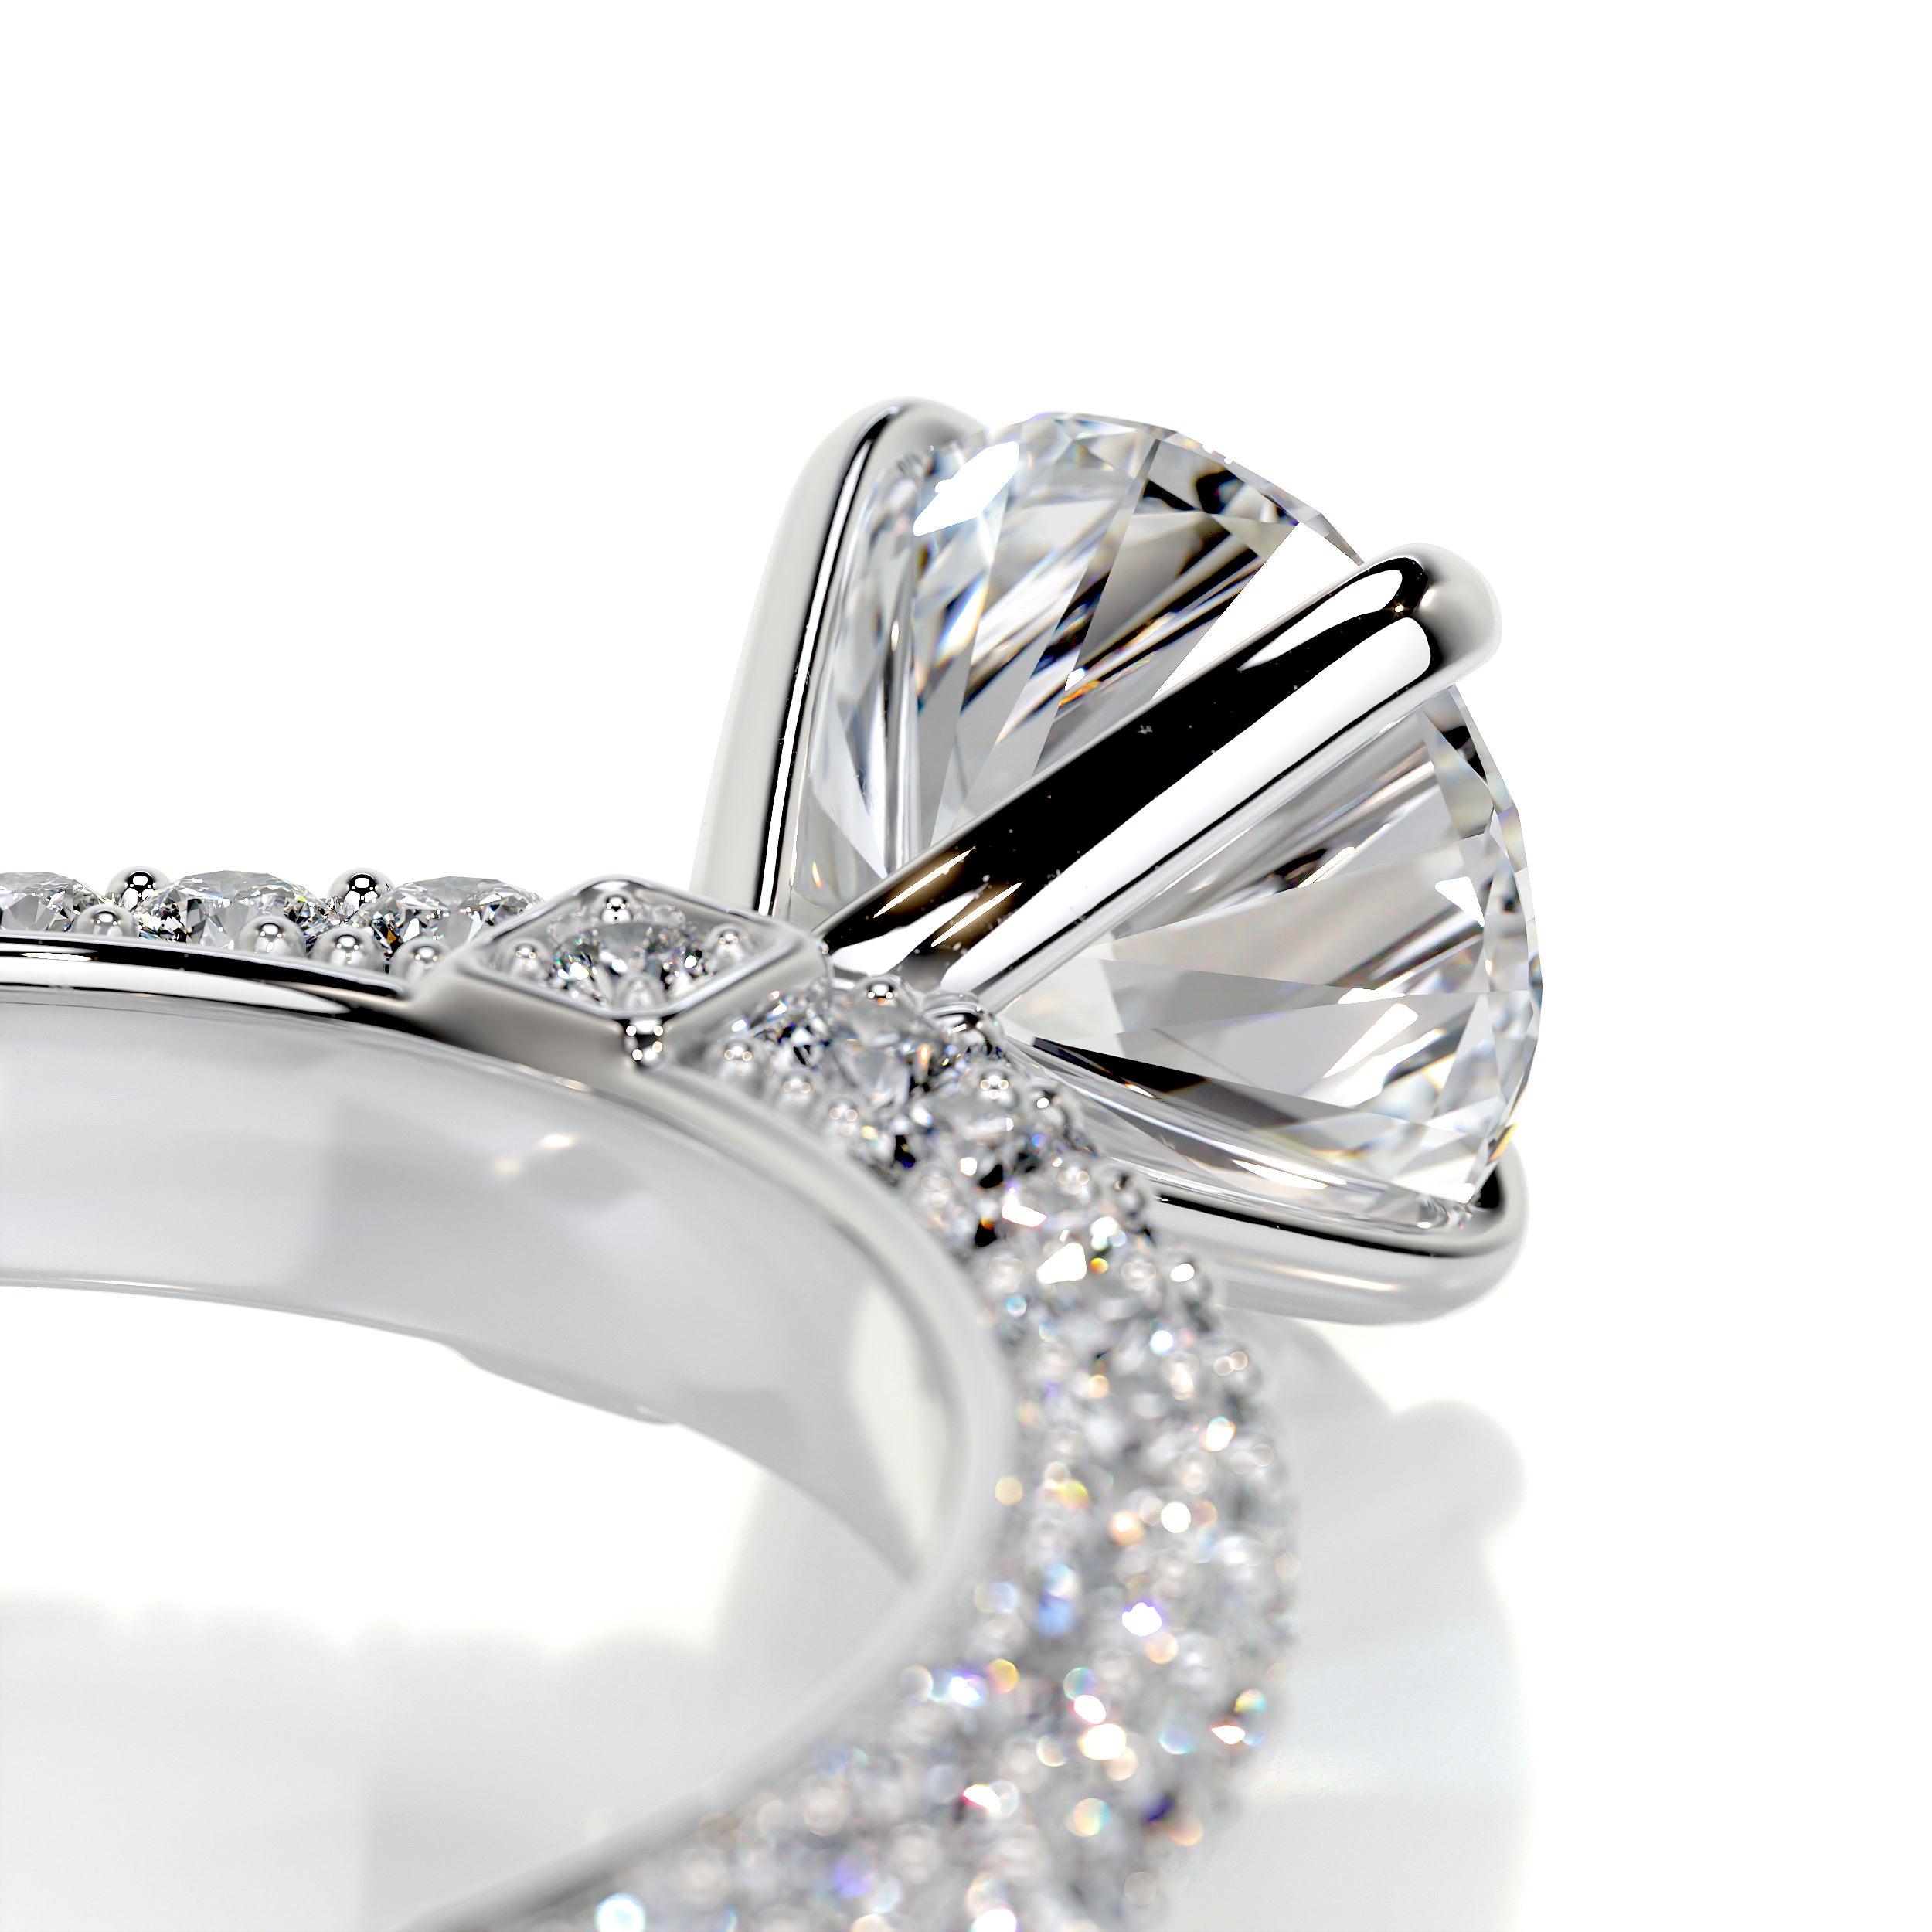 Lillian Diamond Engagement Ring   (1.5 Carat) -14K White Gold